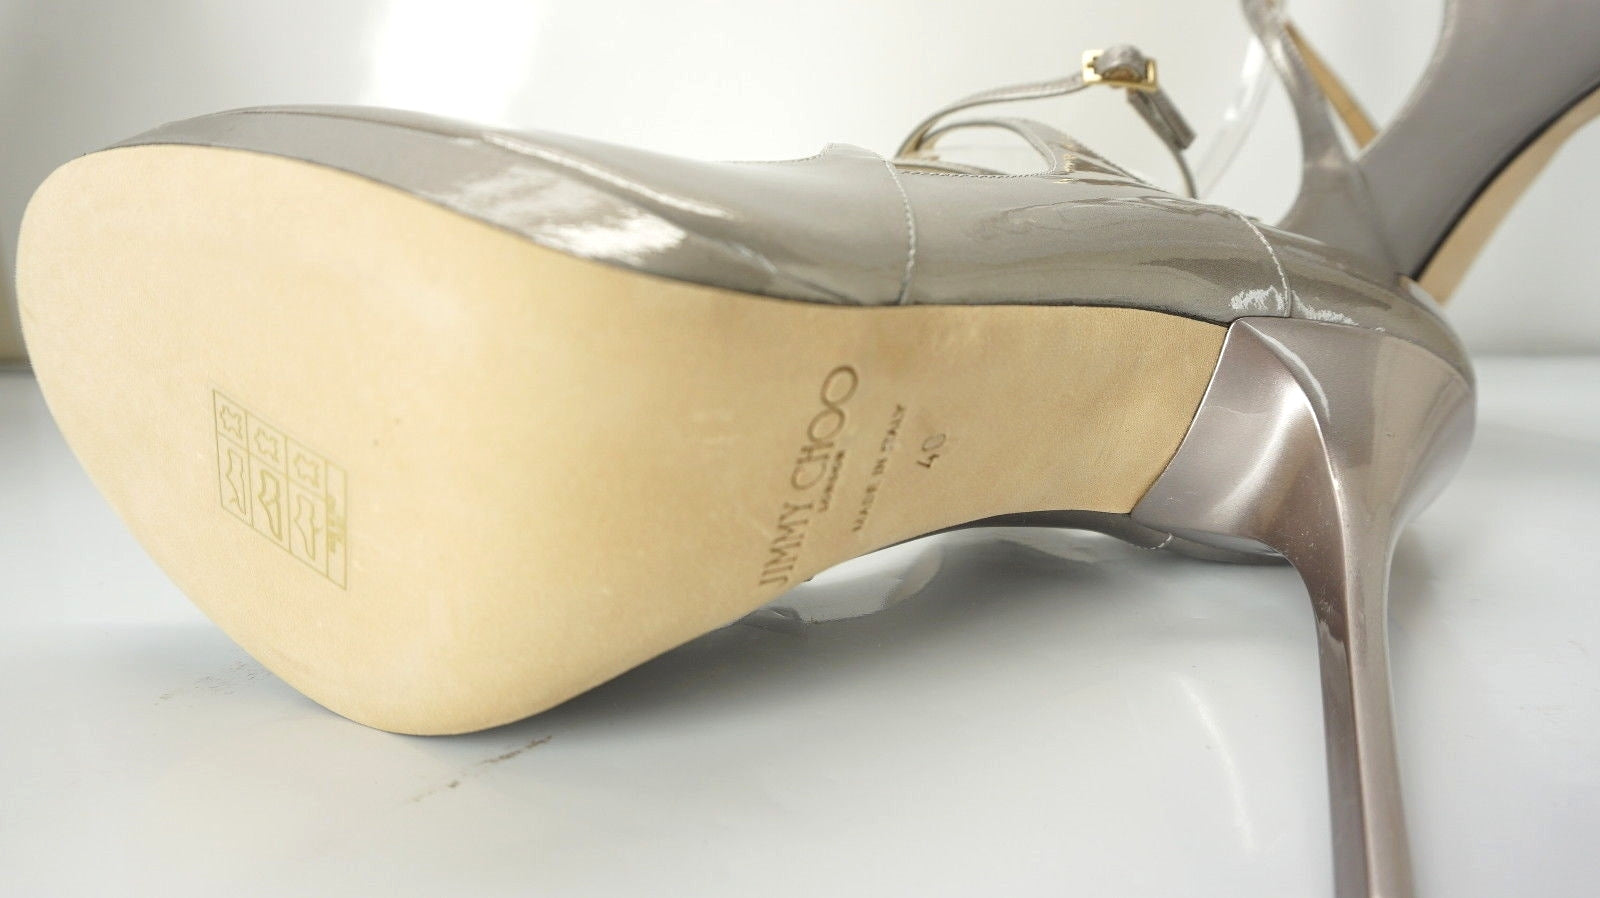 Jimmy Choo Metallic Patent Atlas Platform Strappy Sandals SZ 40 10 NIB $925